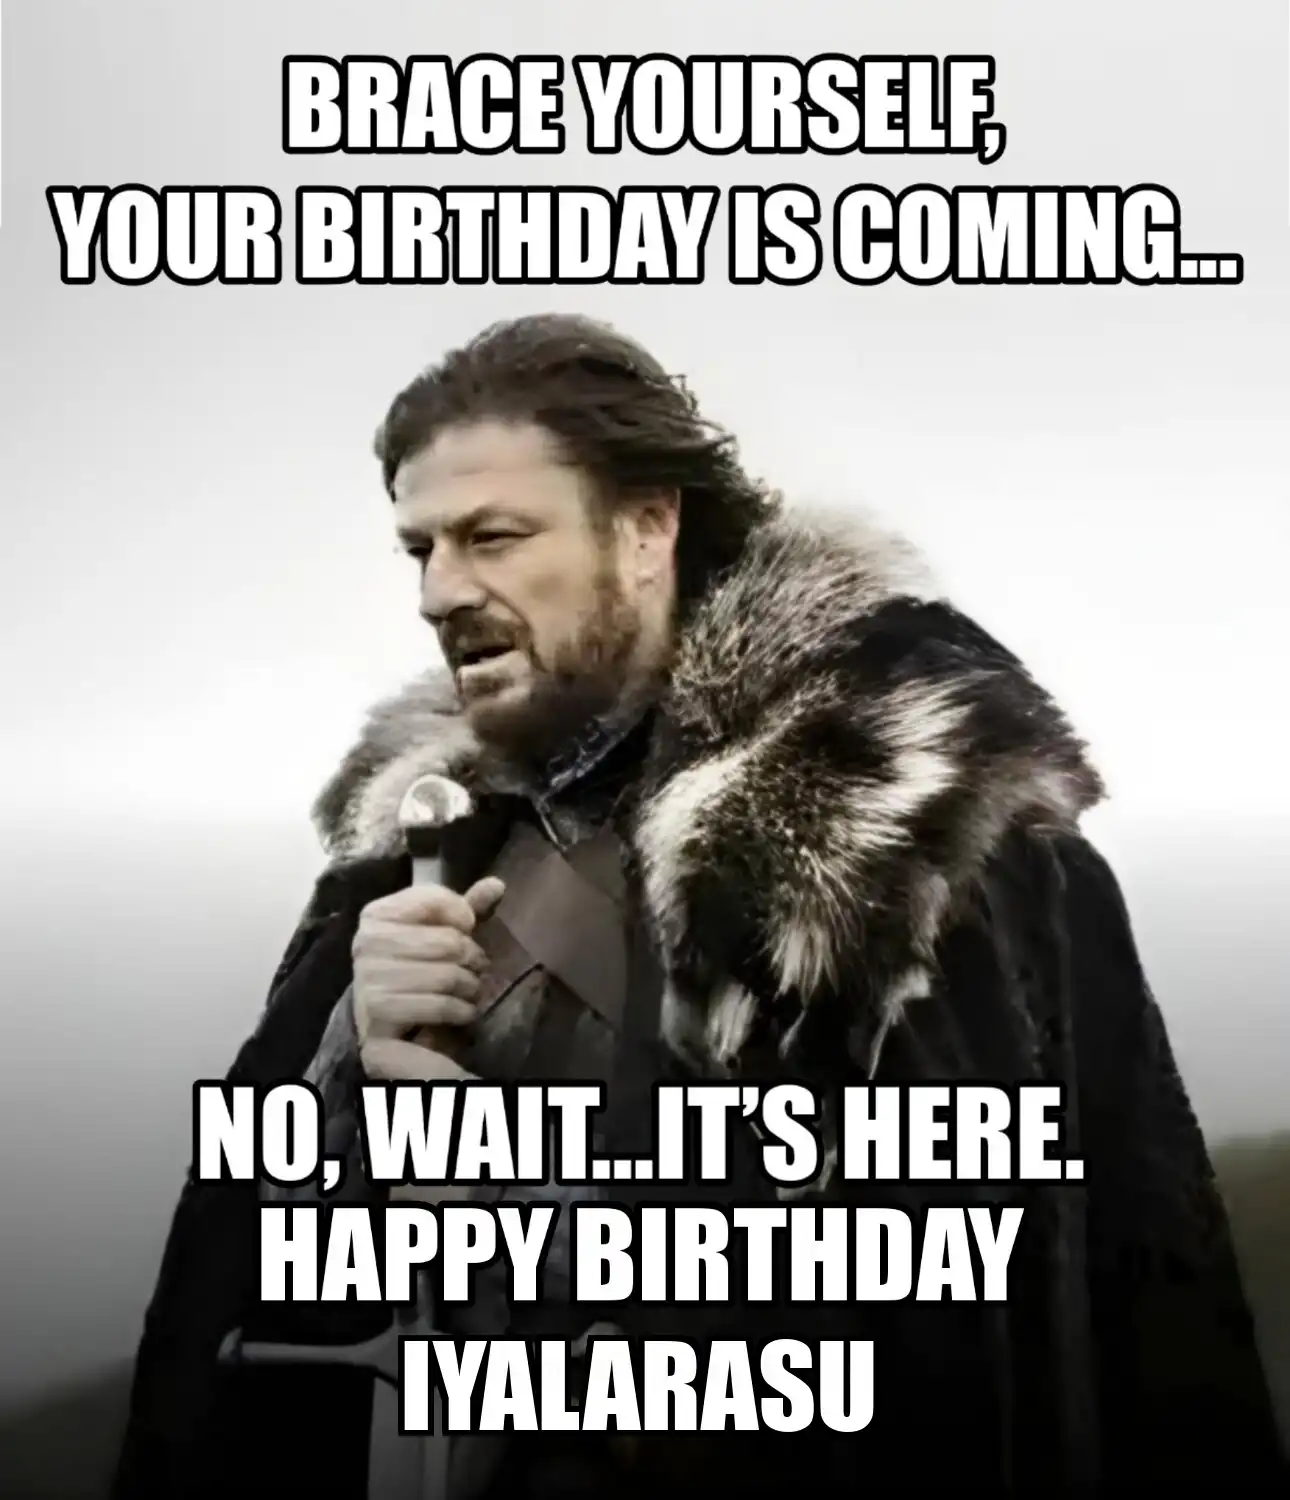 Happy Birthday Iyalarasu Brace Yourself Your Birthday Is Coming Meme